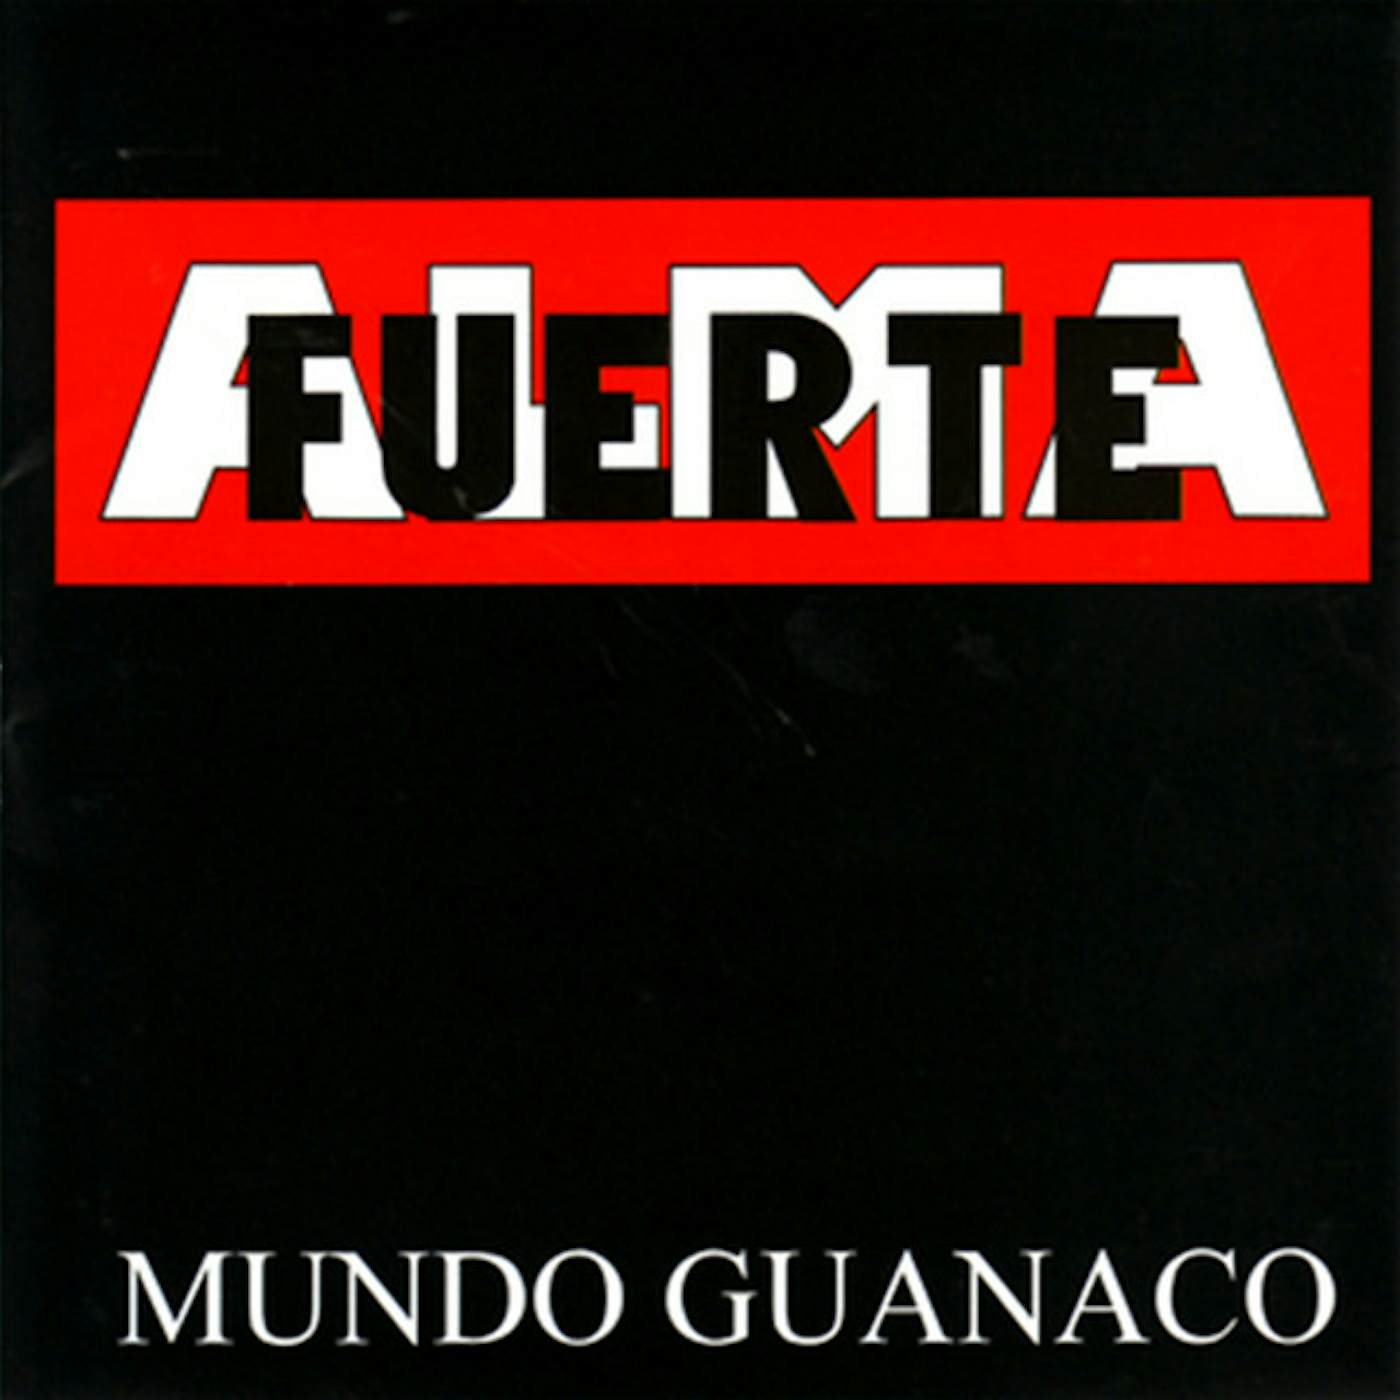 Almafuerte Mundo Guanaco Vinyl Record